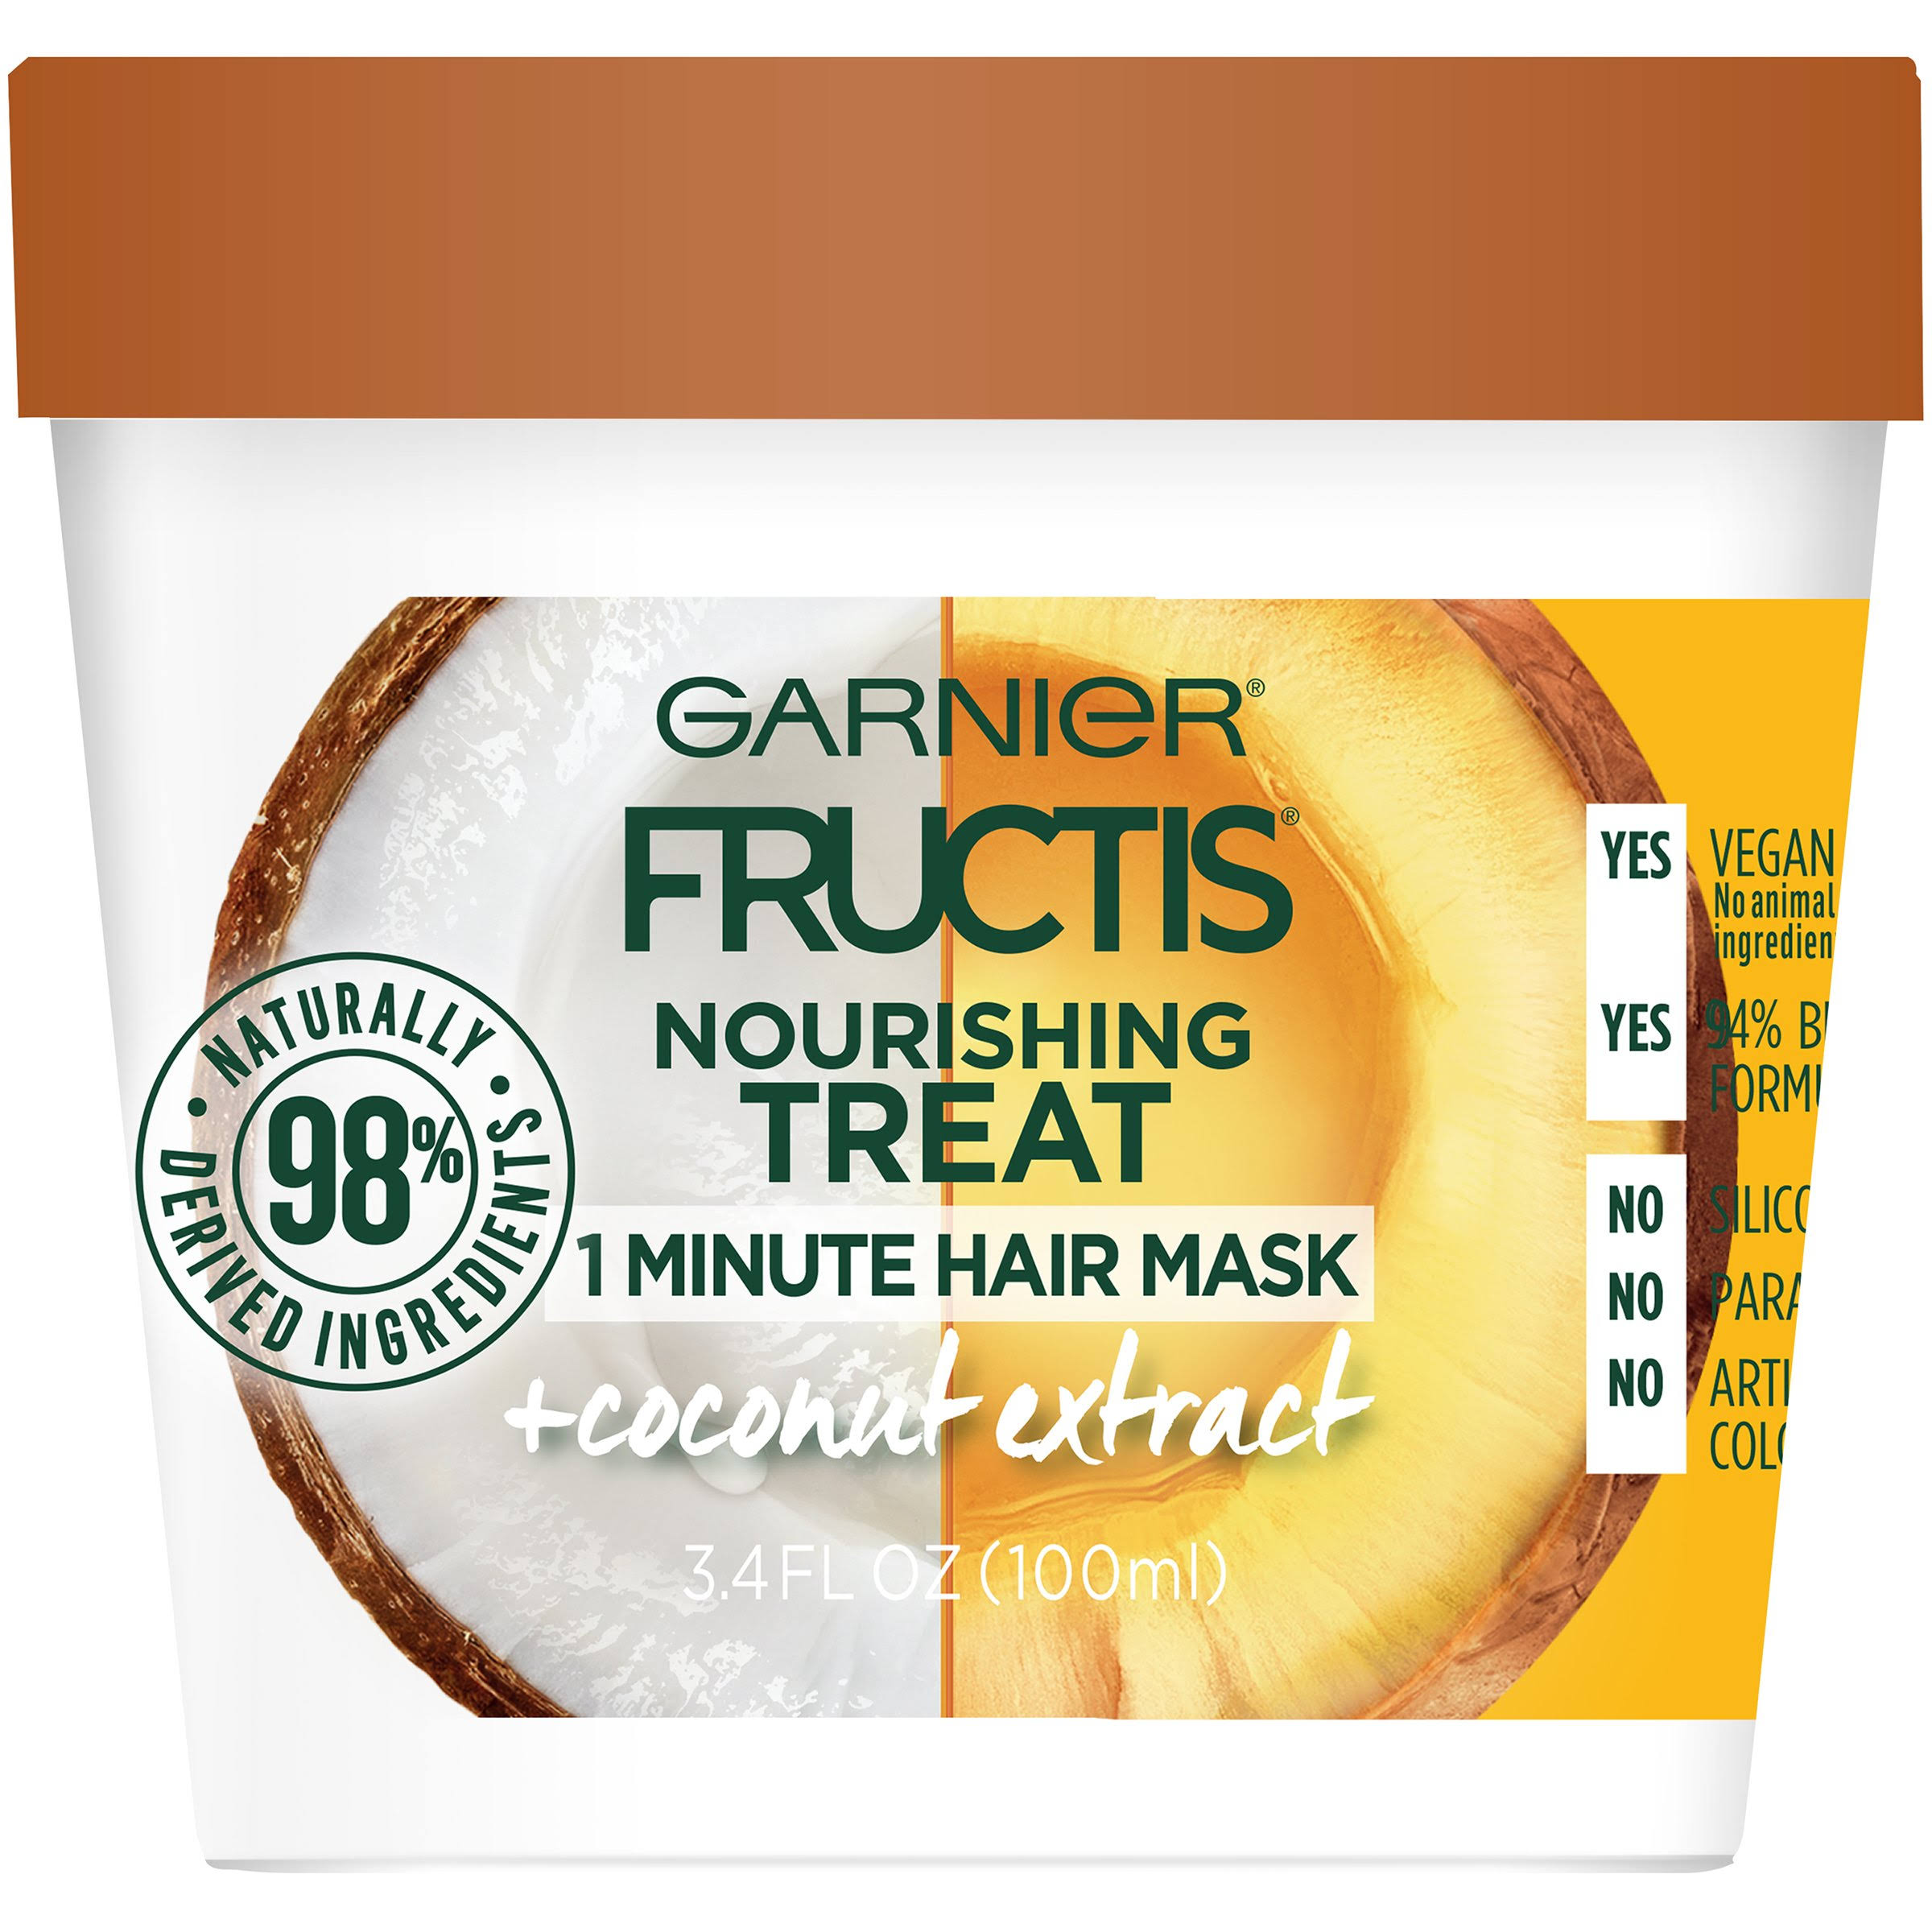 Garnier Fructis Nourishing Treat 1 Minute Hair Mask - Coconut Extract, 3.4oz